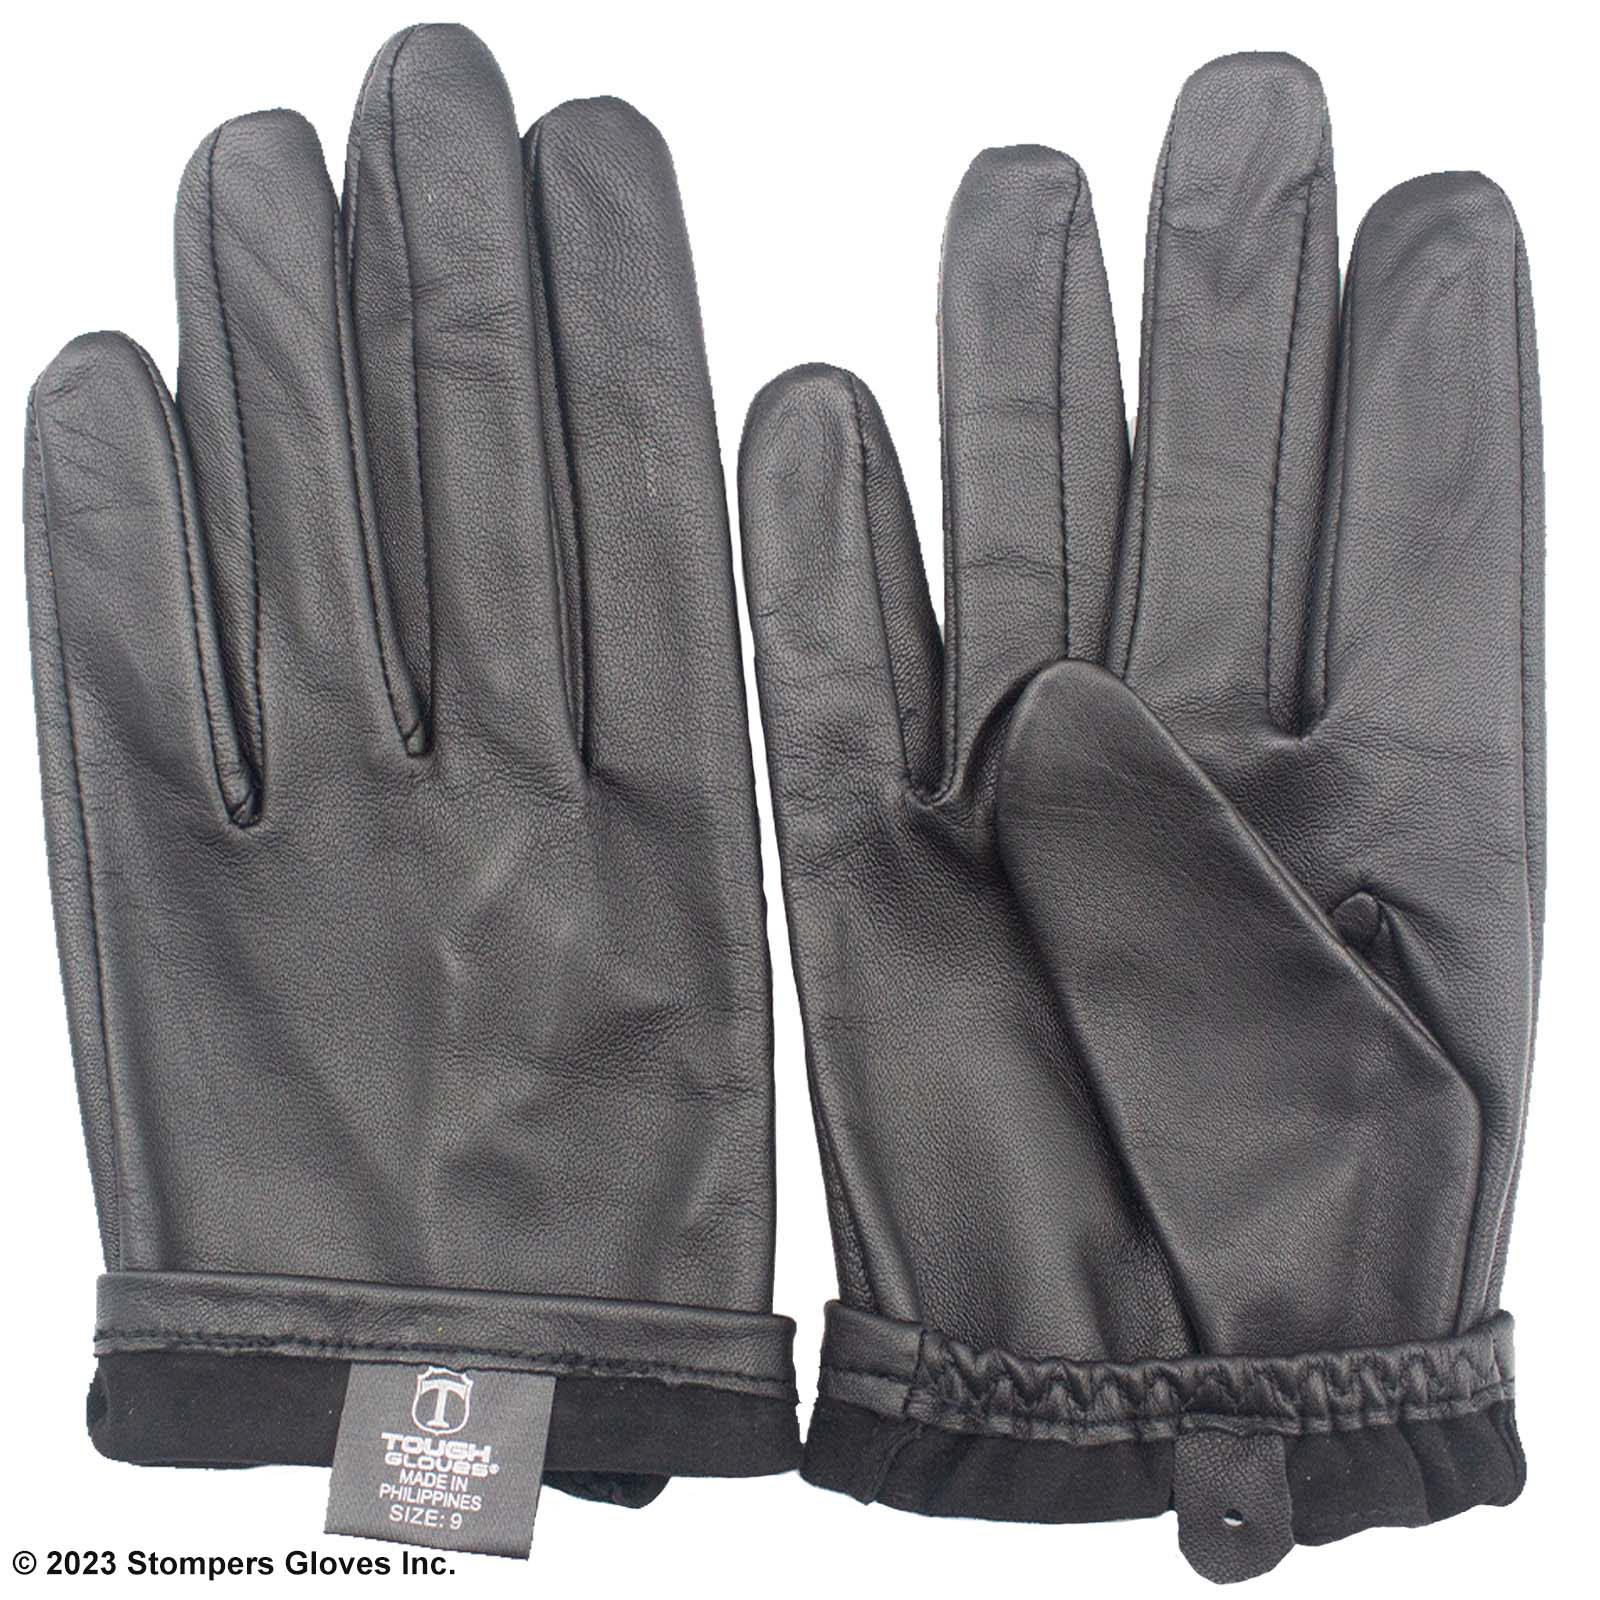 Patrol-X 2.0 Gloves by TOUGH GLOVES